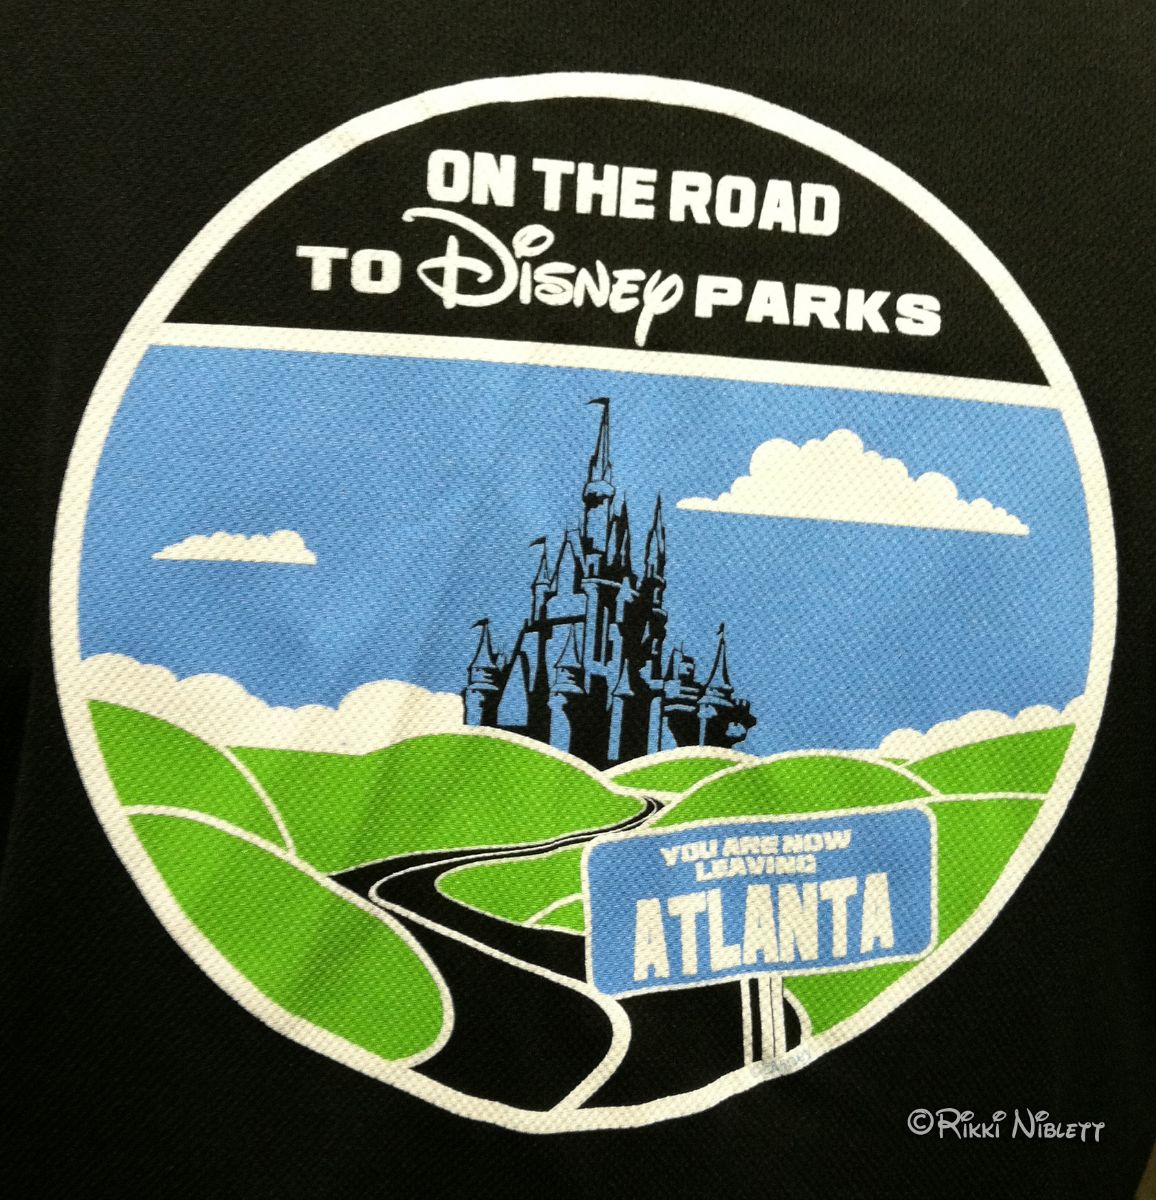 On The Road To Disney Parks - Atlanta